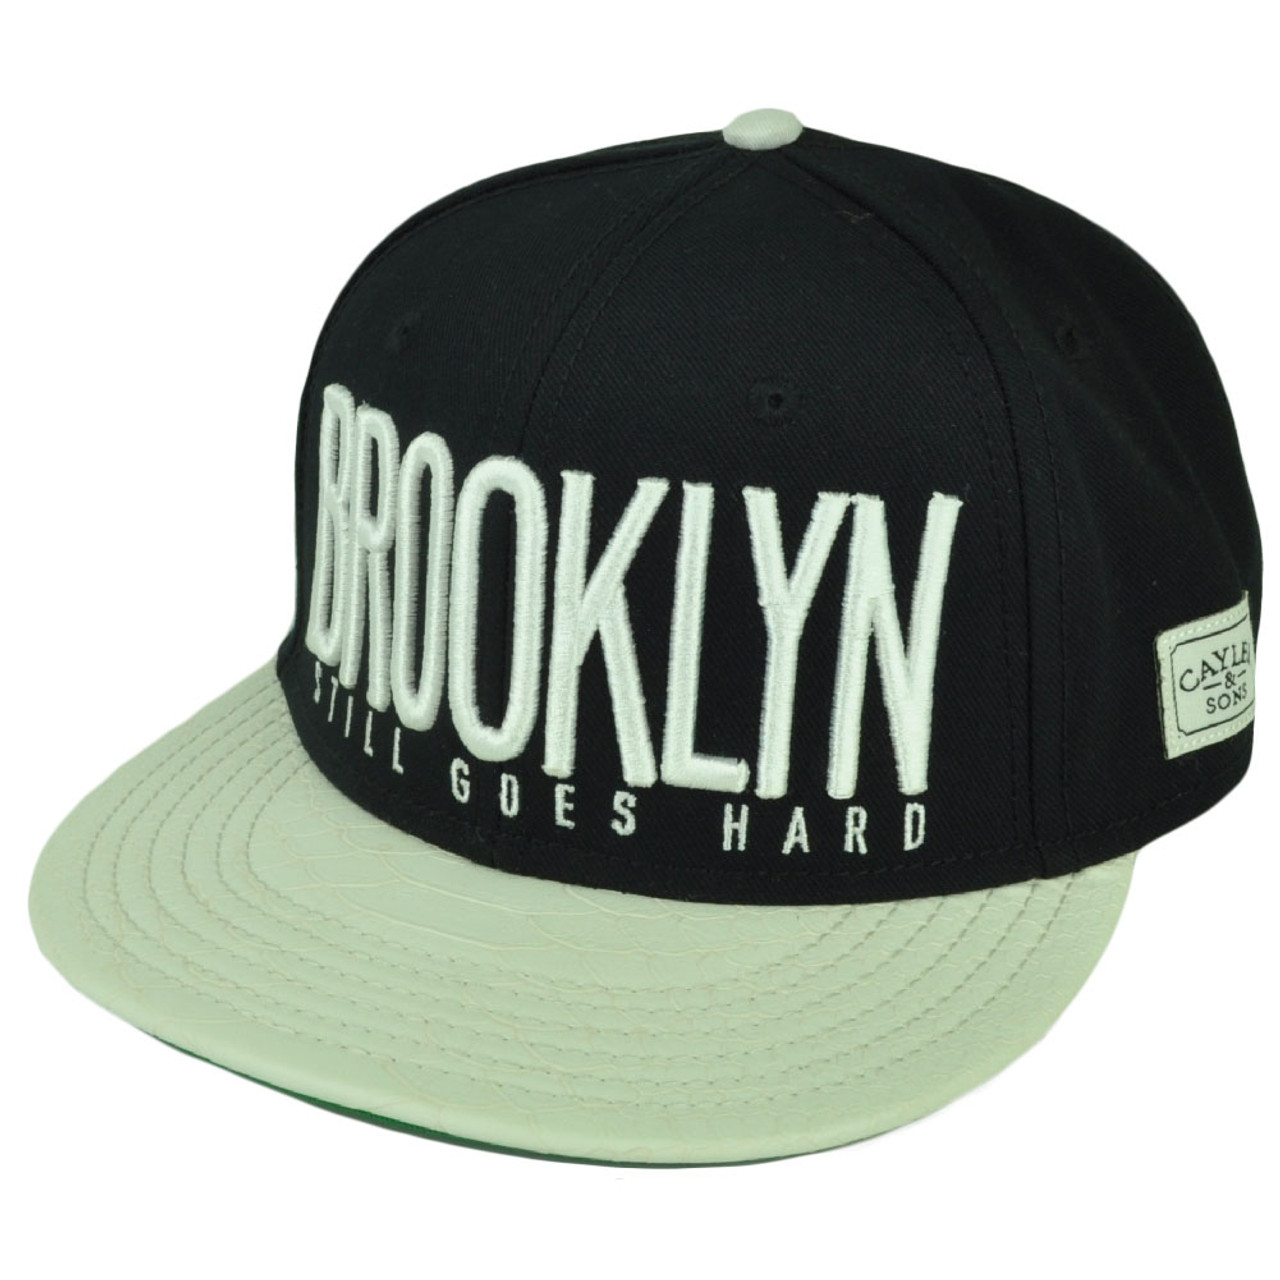 Store Still and Hard buckle Skin Cap Goes Cap - Flat Hat Cayler Snake Bill Snap Brooklyn Sons